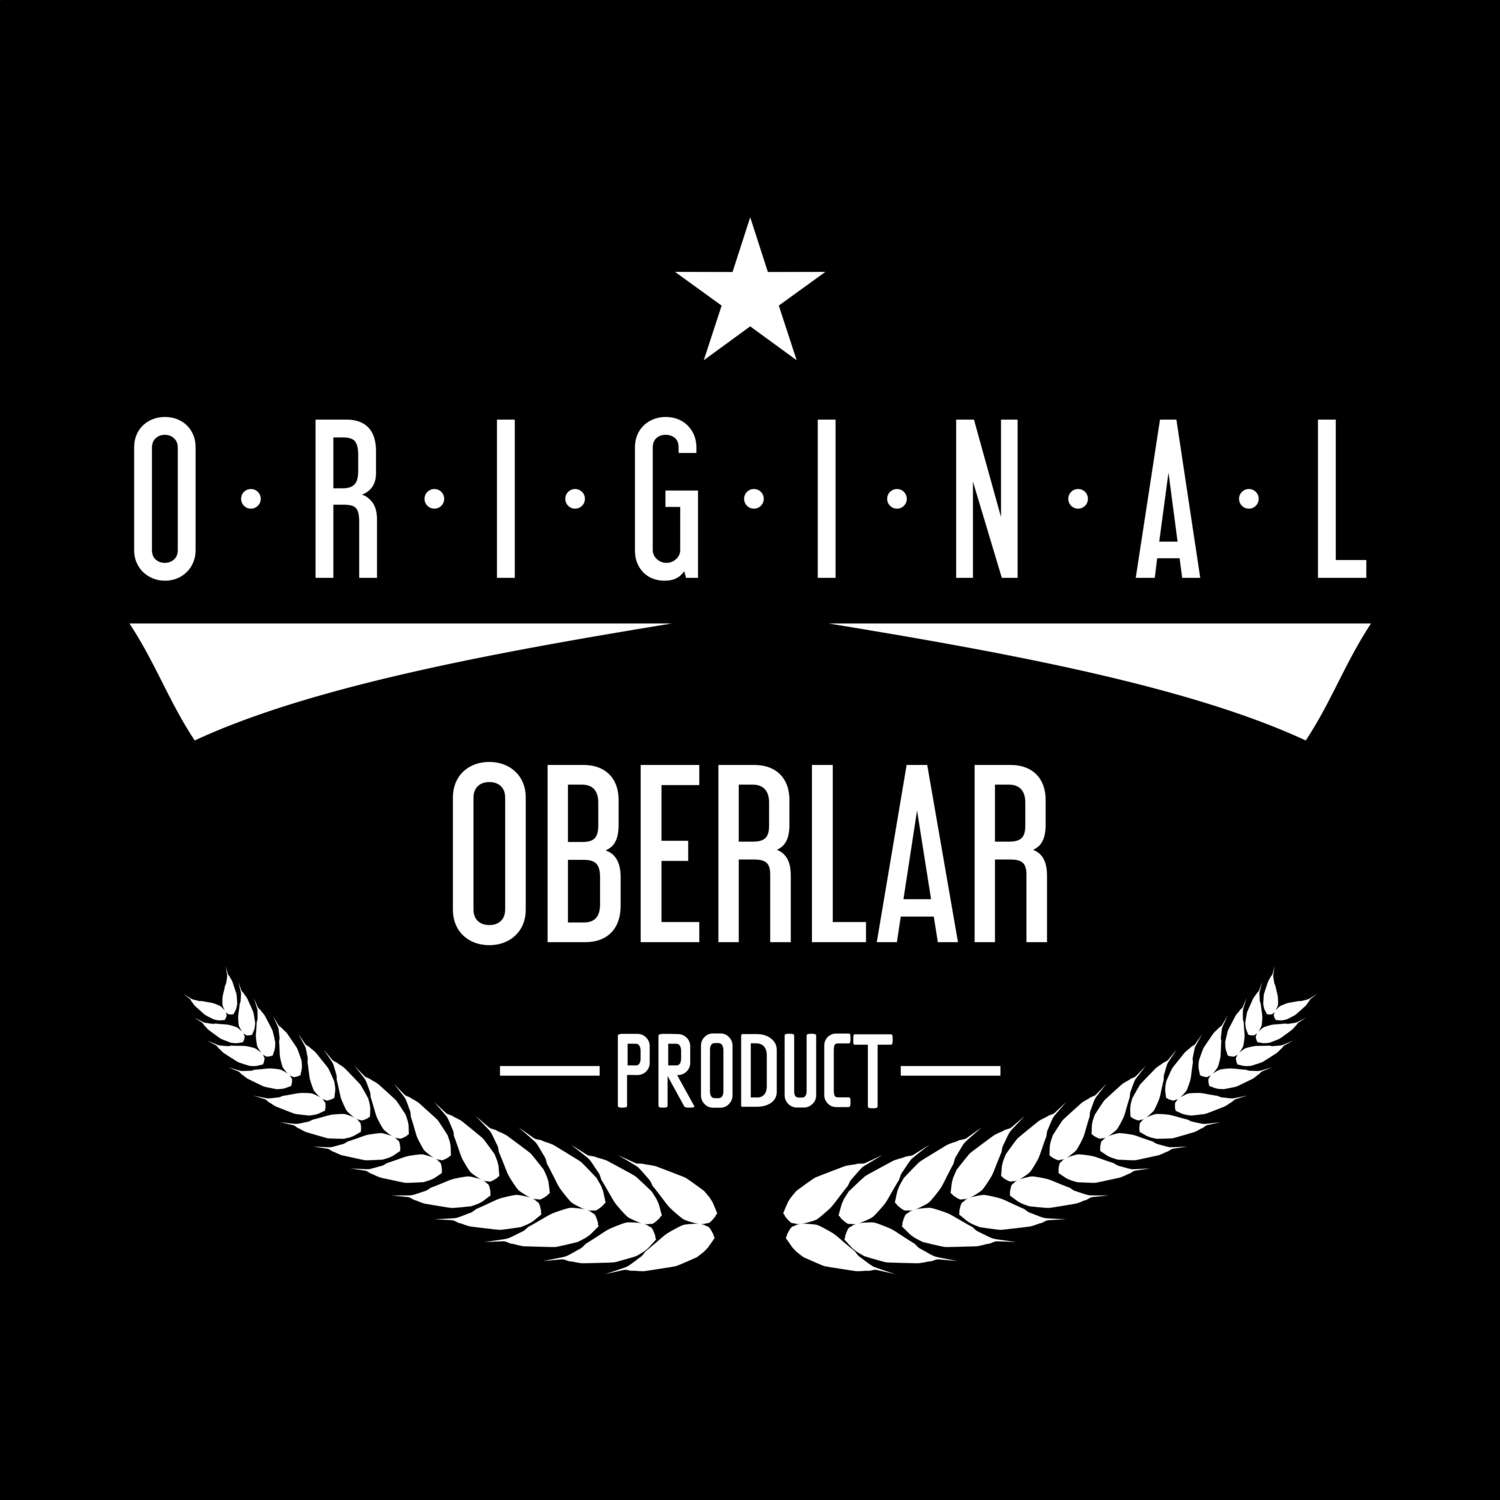 Oberlar T-Shirt »Original Product«